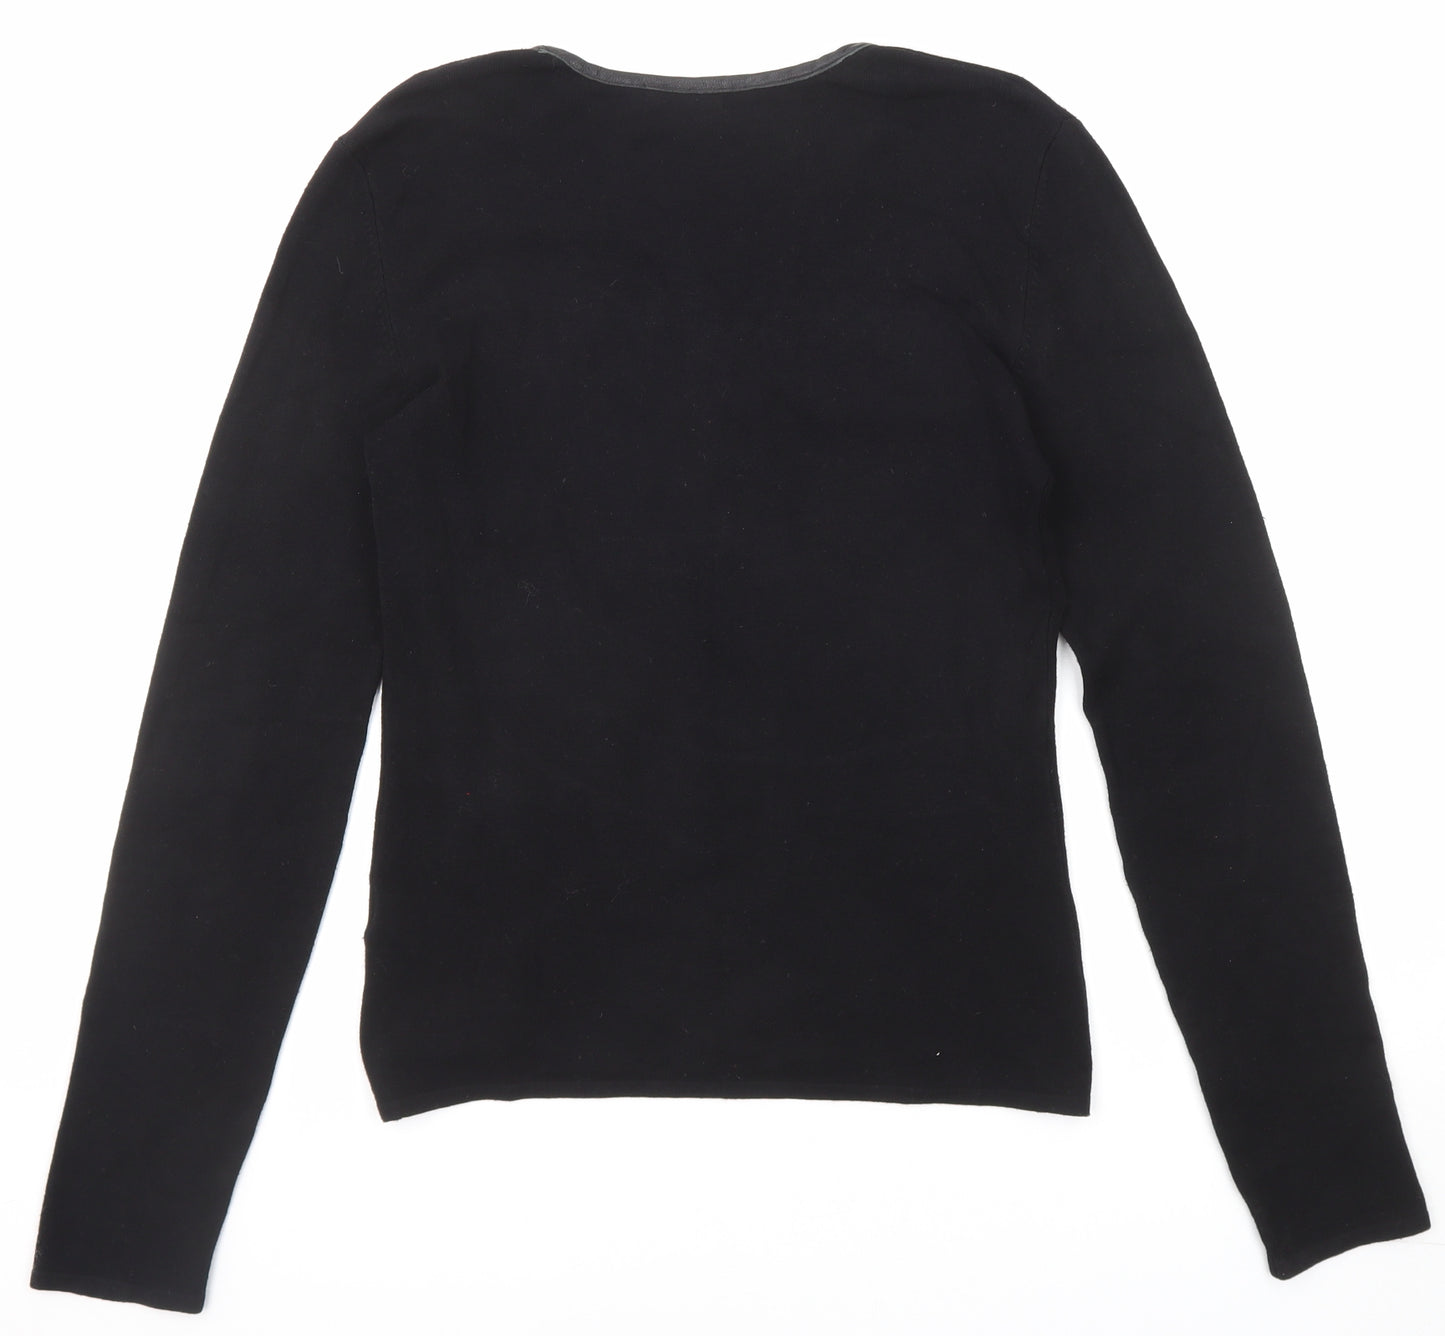 Debbie Morgan Womens Black V-Neck Viscose Pullover Jumper Size S - Size S-M